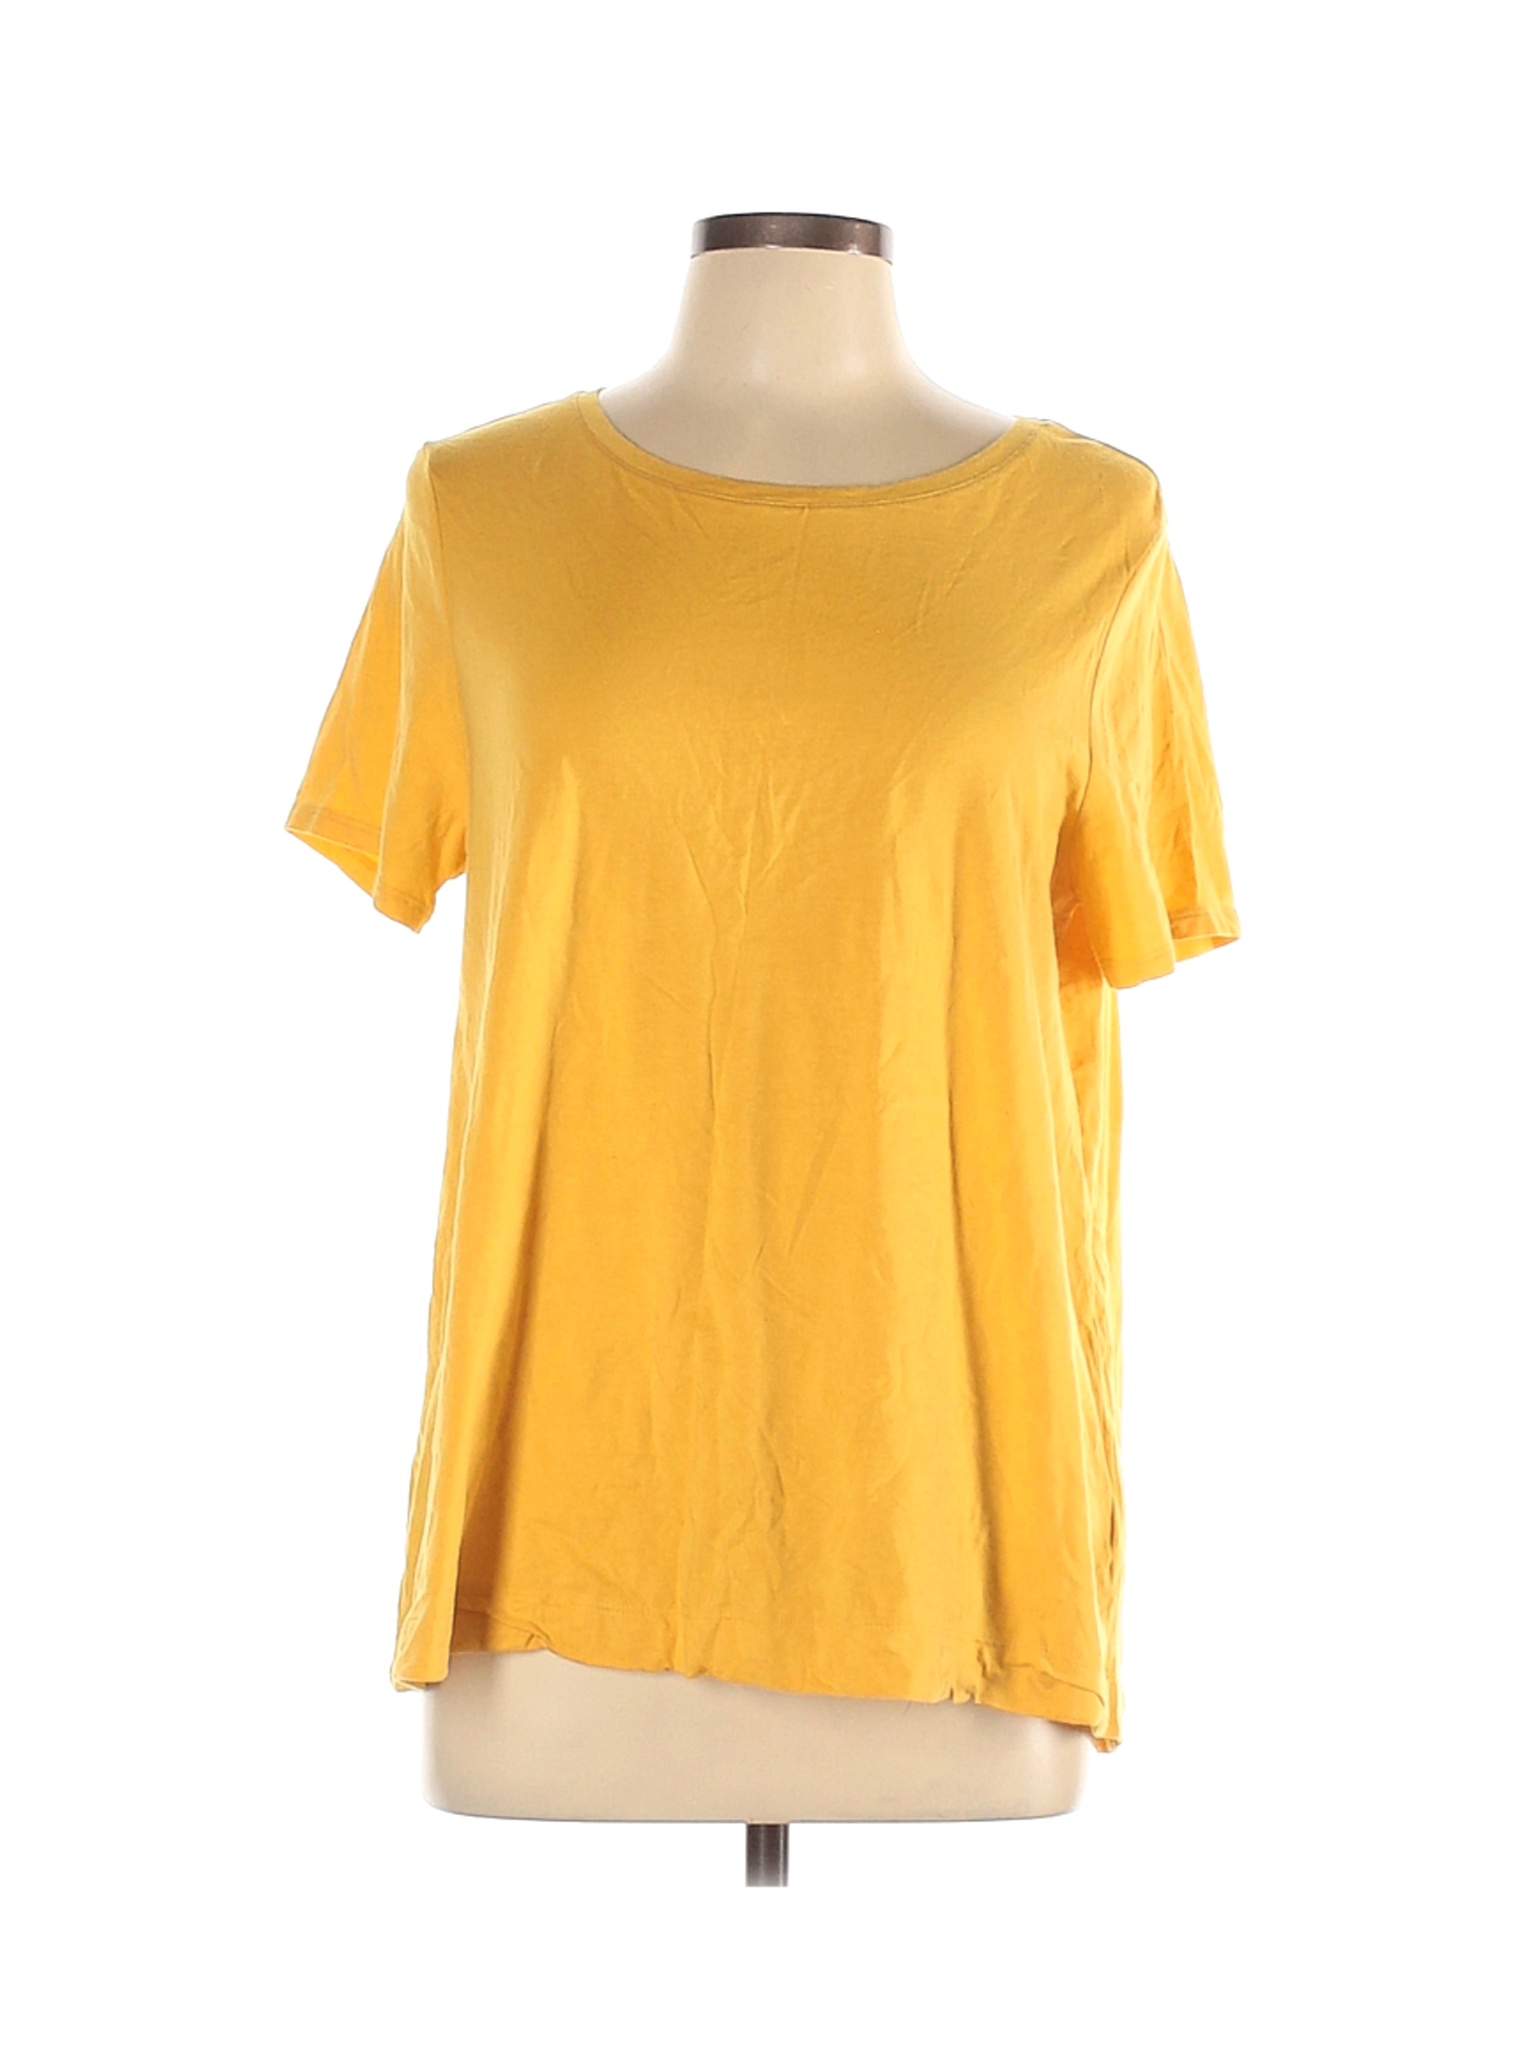 Old Navy Women Yellow Short Sleeve T-Shirt L | eBay